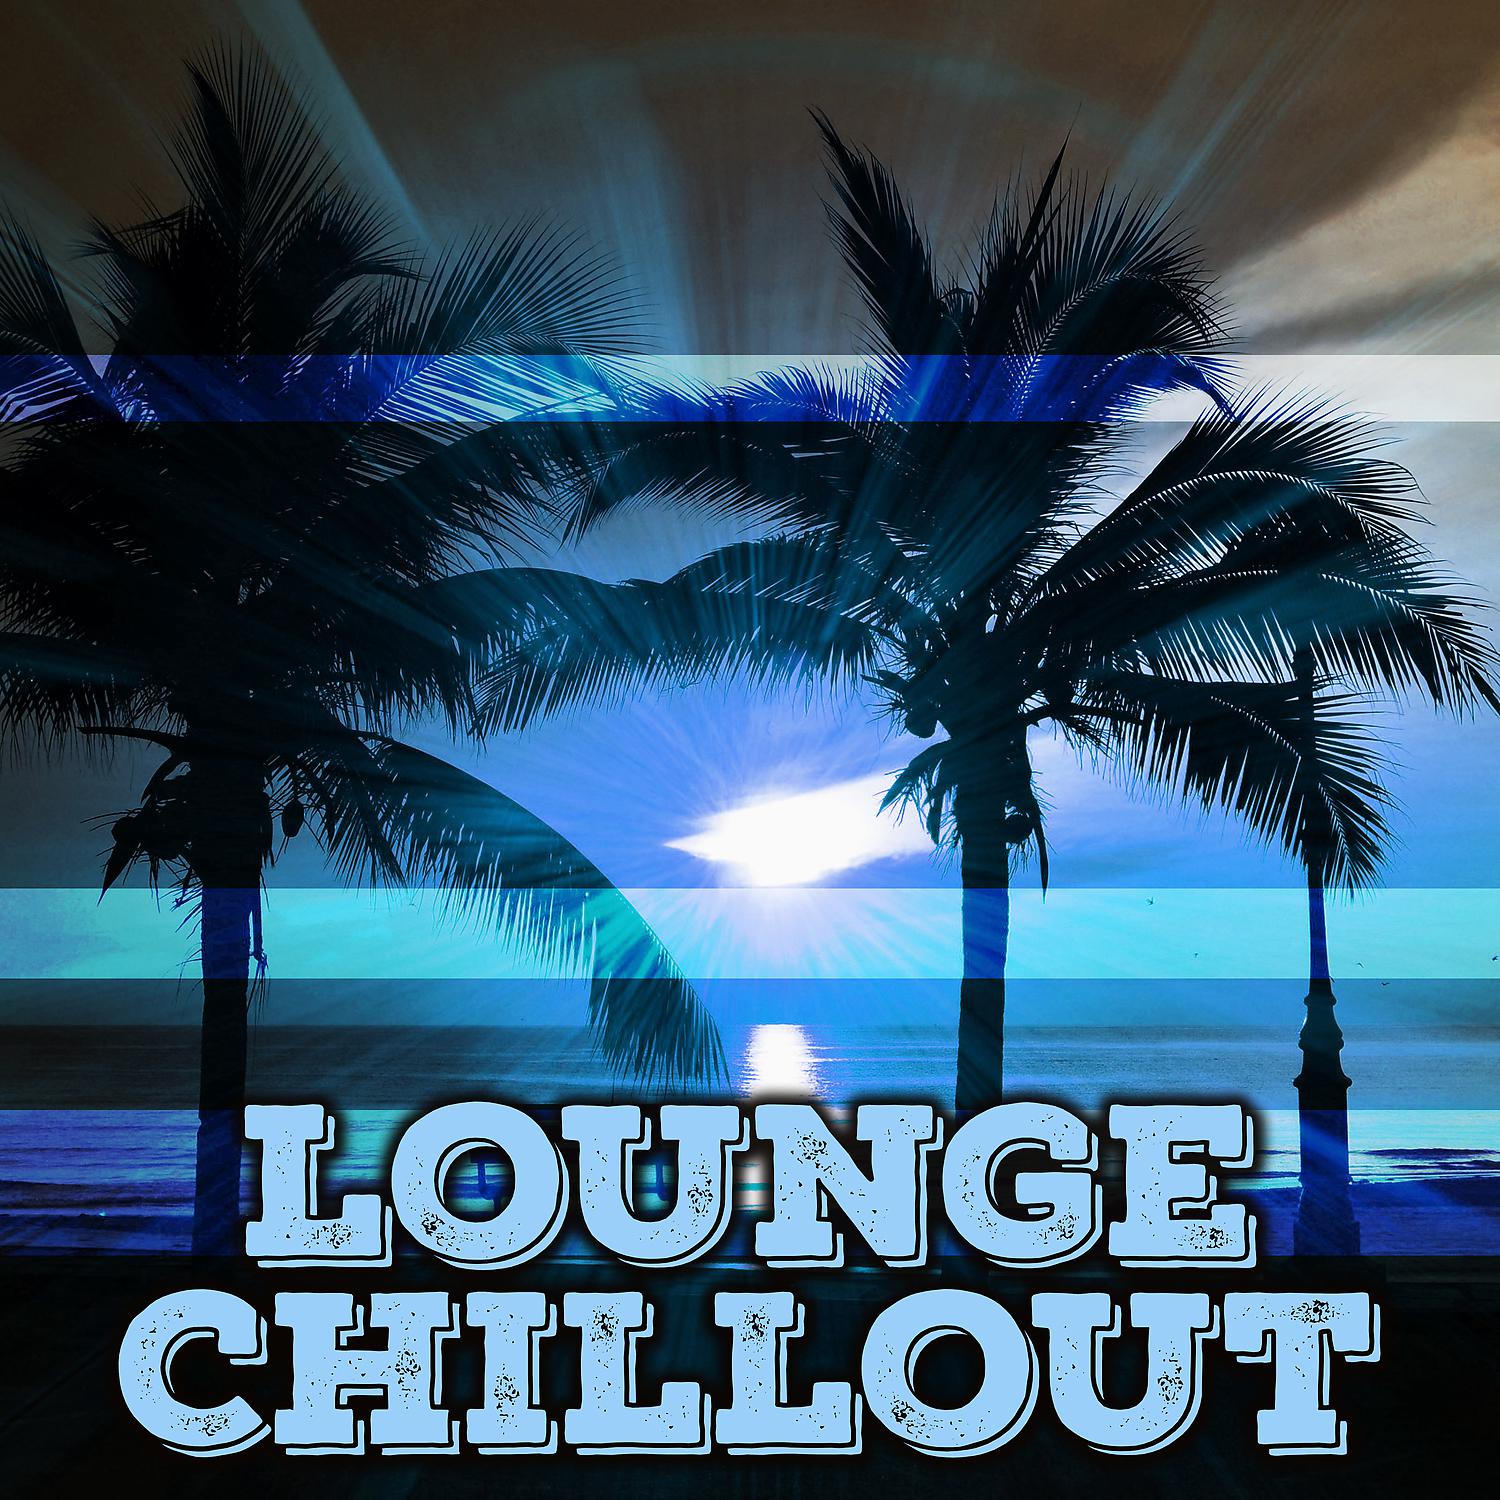 Постер альбома Lounge Chillout